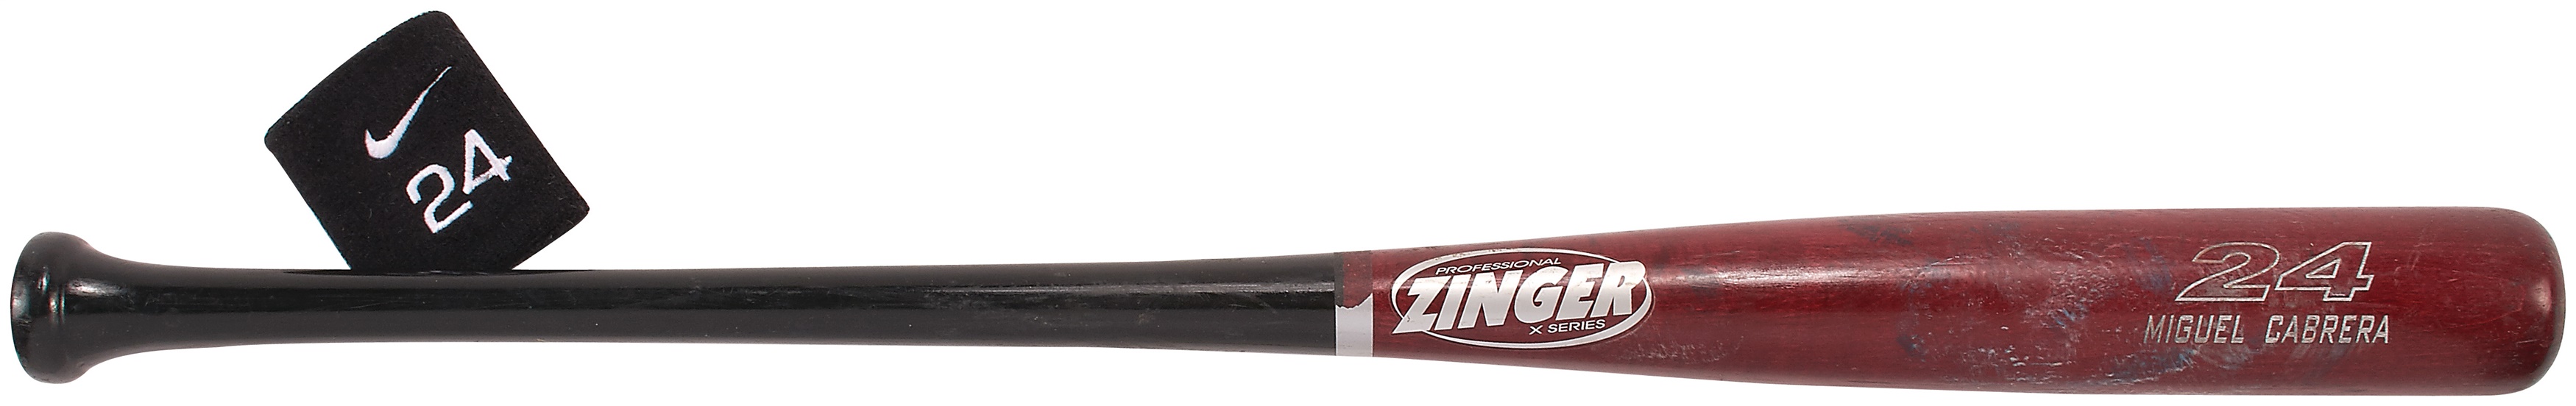 2005-07 Miguel Cabrera Game Used Zinger Bat & Wristband (PSA 9 LOA)